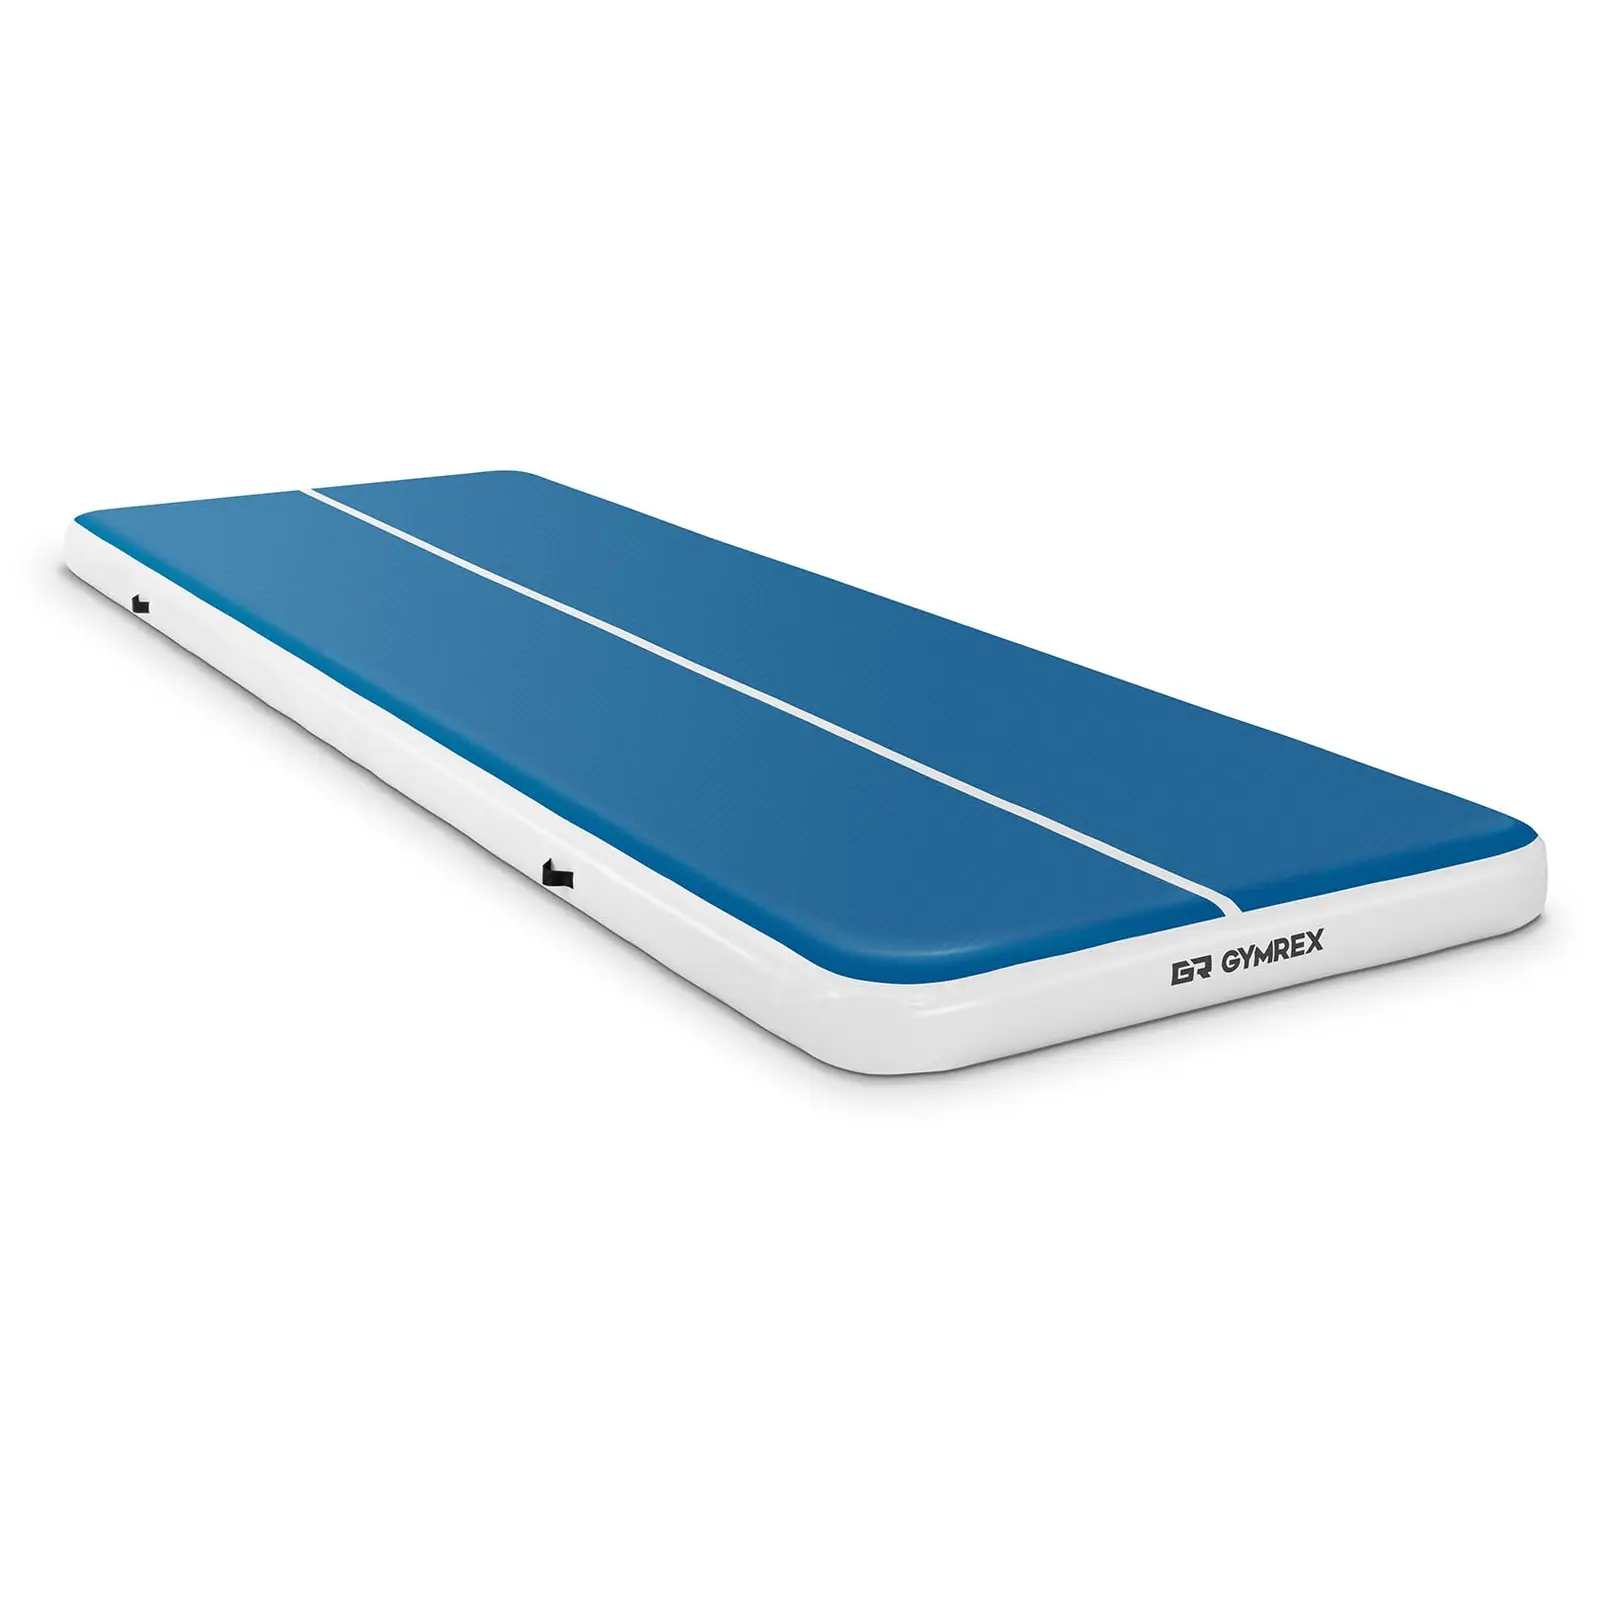 Aufblasbare Turnmatte - 600 x 200 x 20 cm - 400 kg - blau/weiß